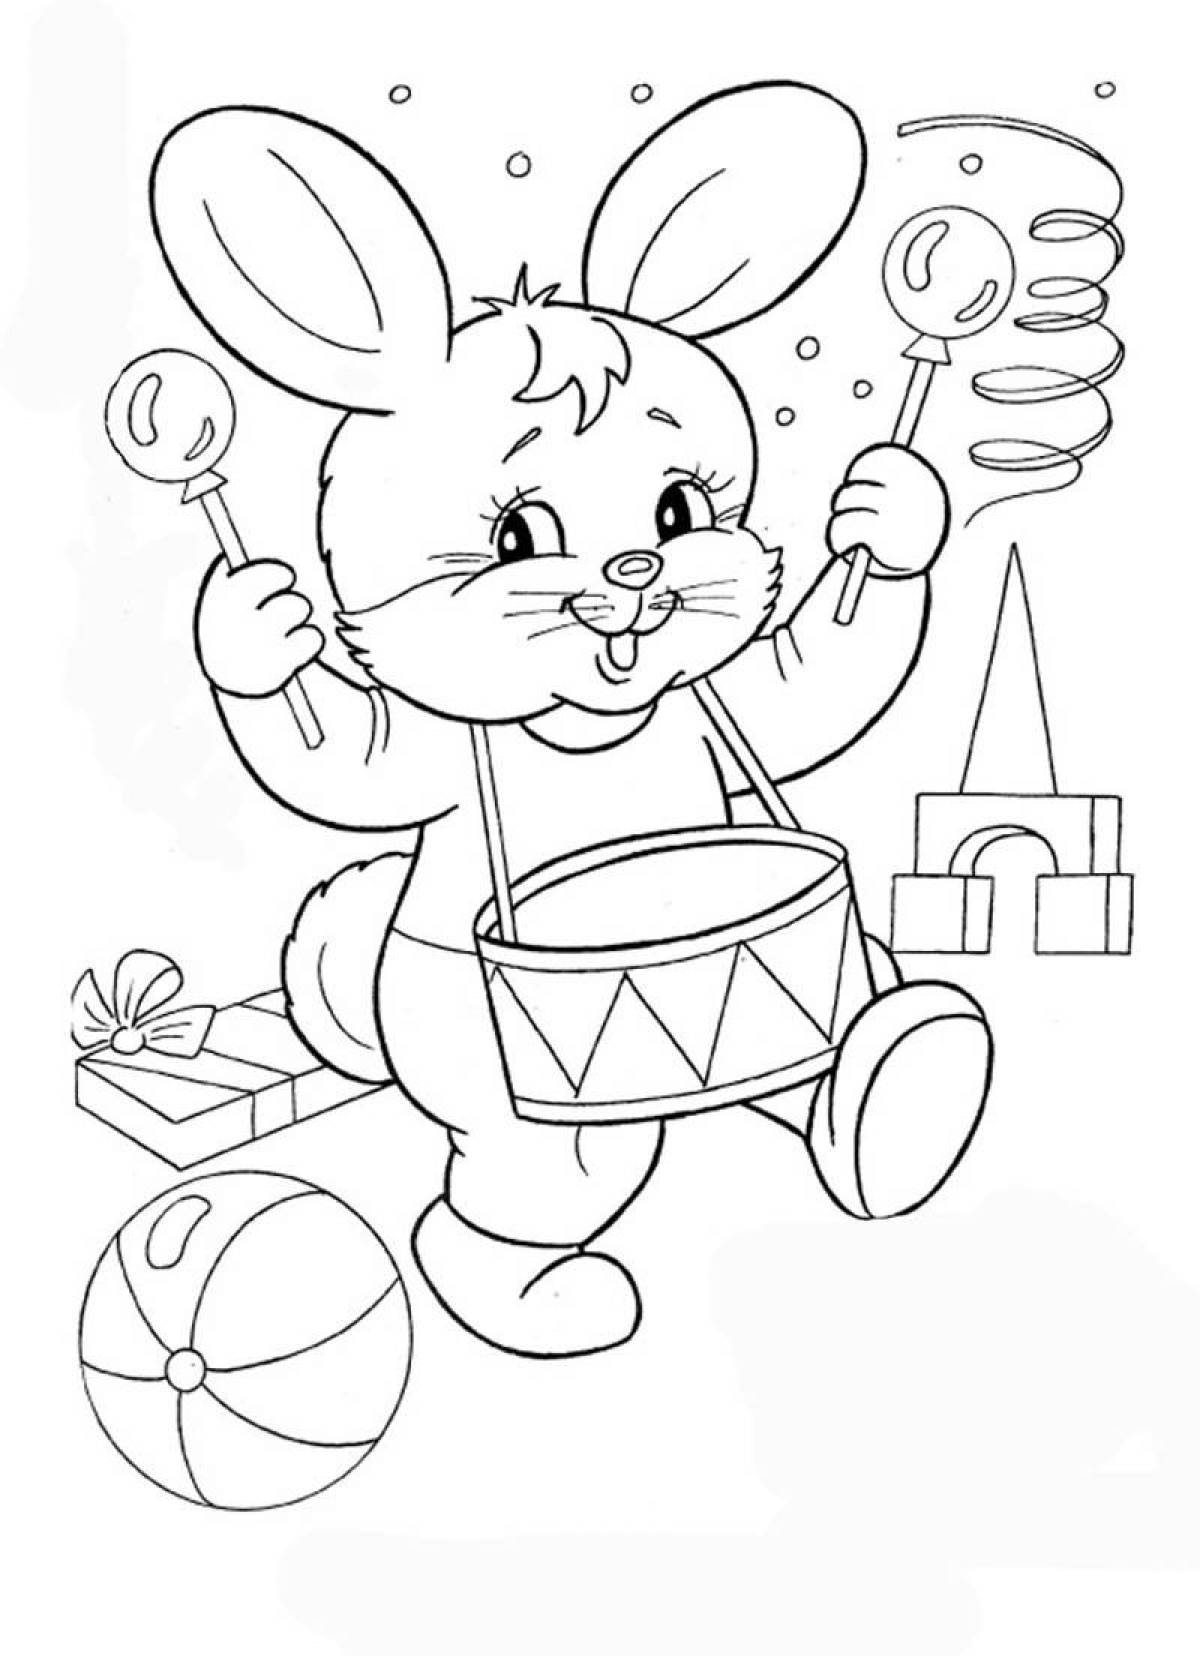 Wonderful rabbit coloring game